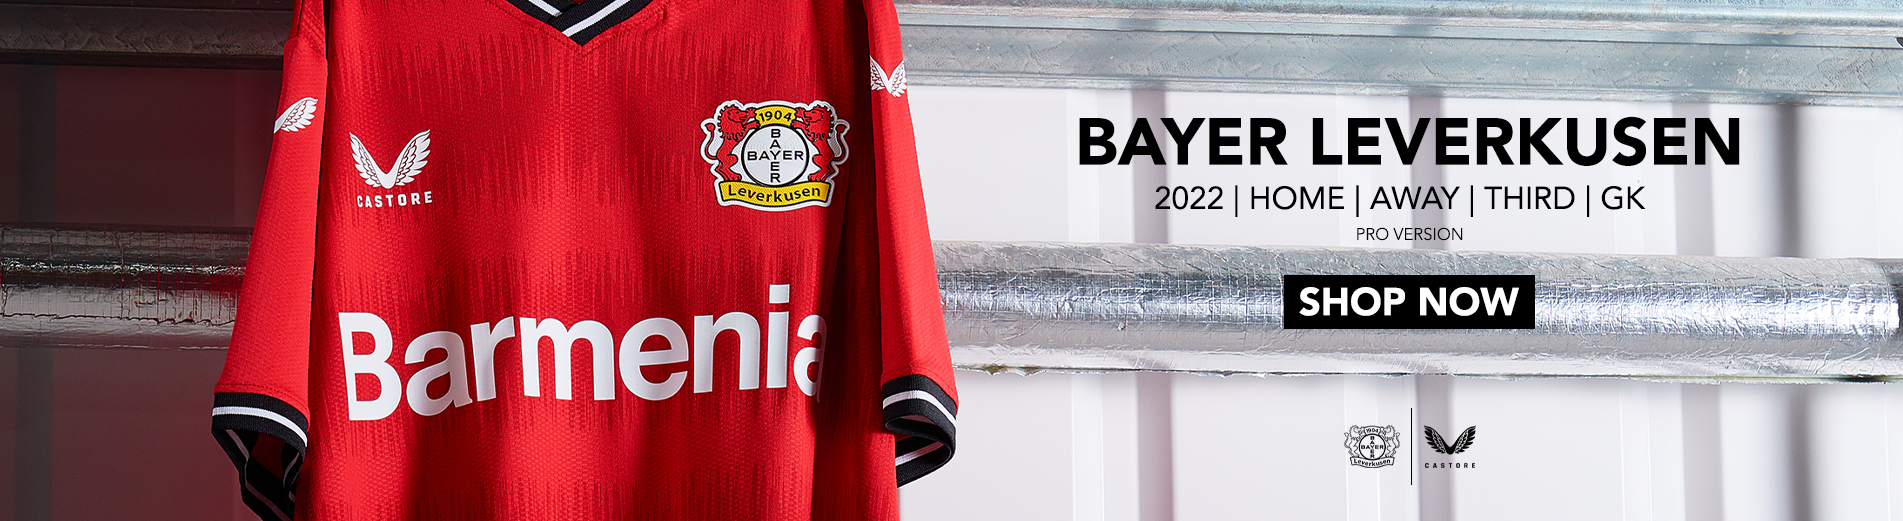 Bayer Leverkusen Clearance